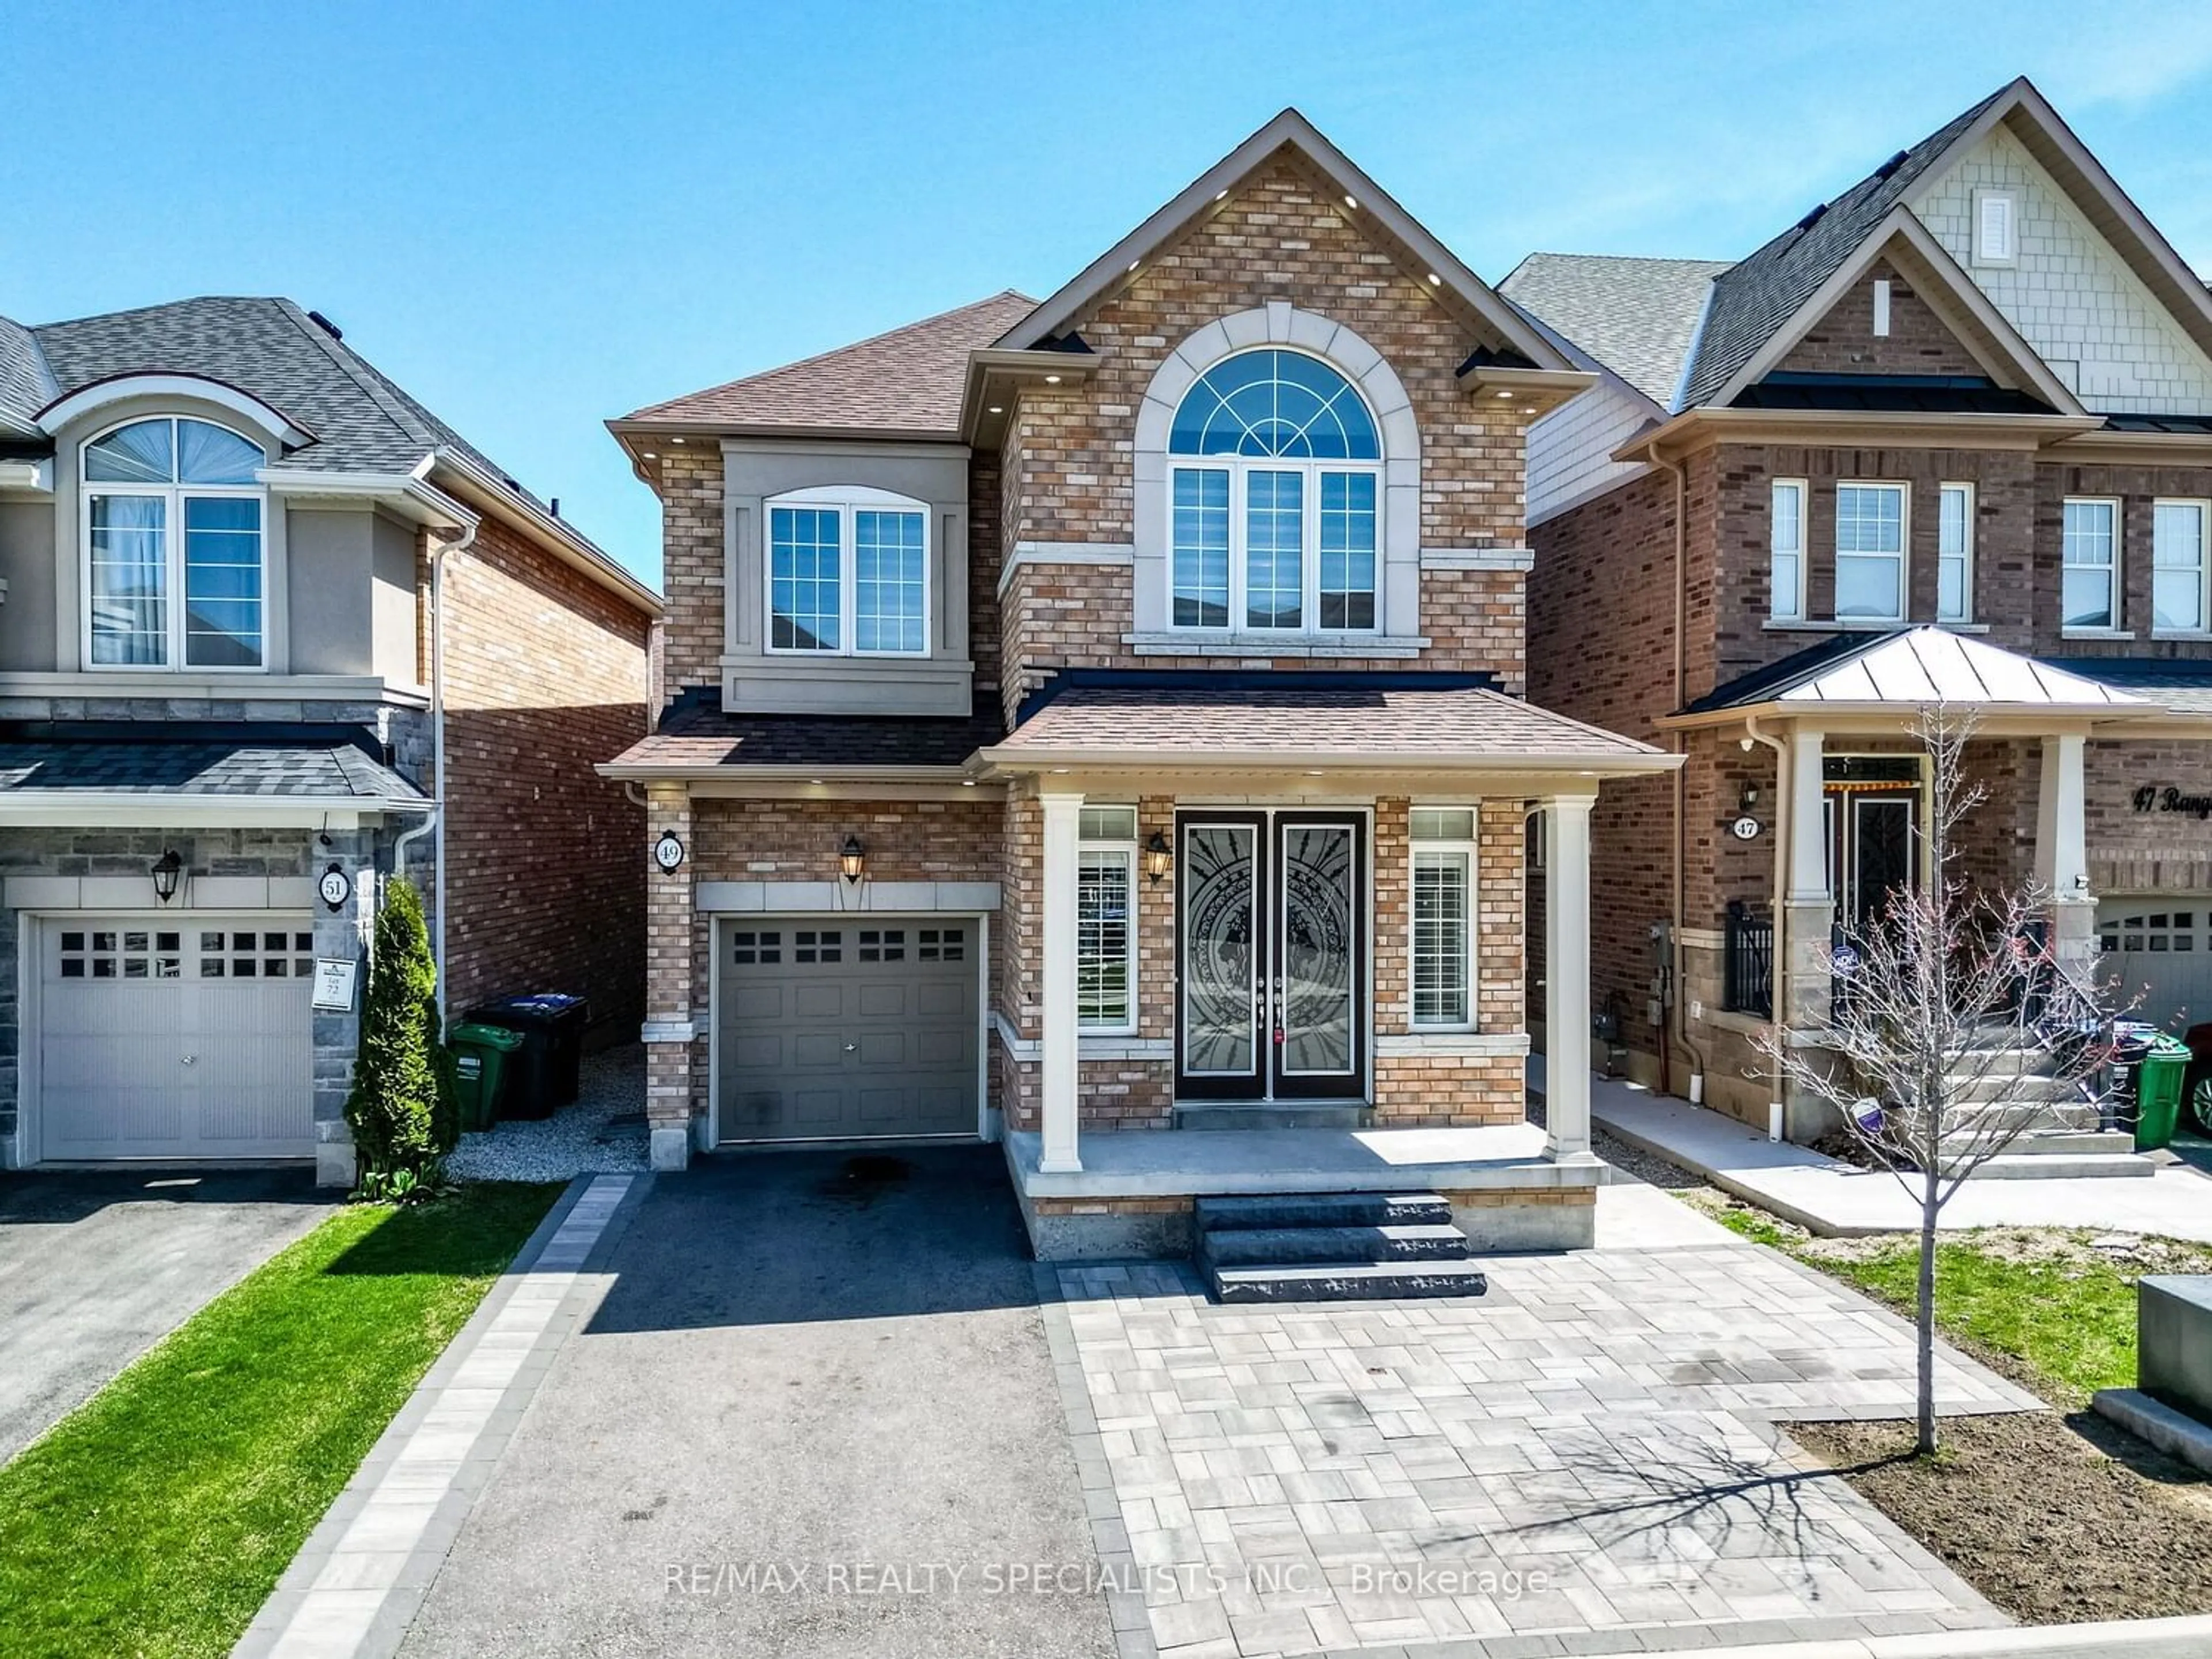 Home with brick exterior material for 49 Rangemore Rd, Brampton Ontario L7A 4V7